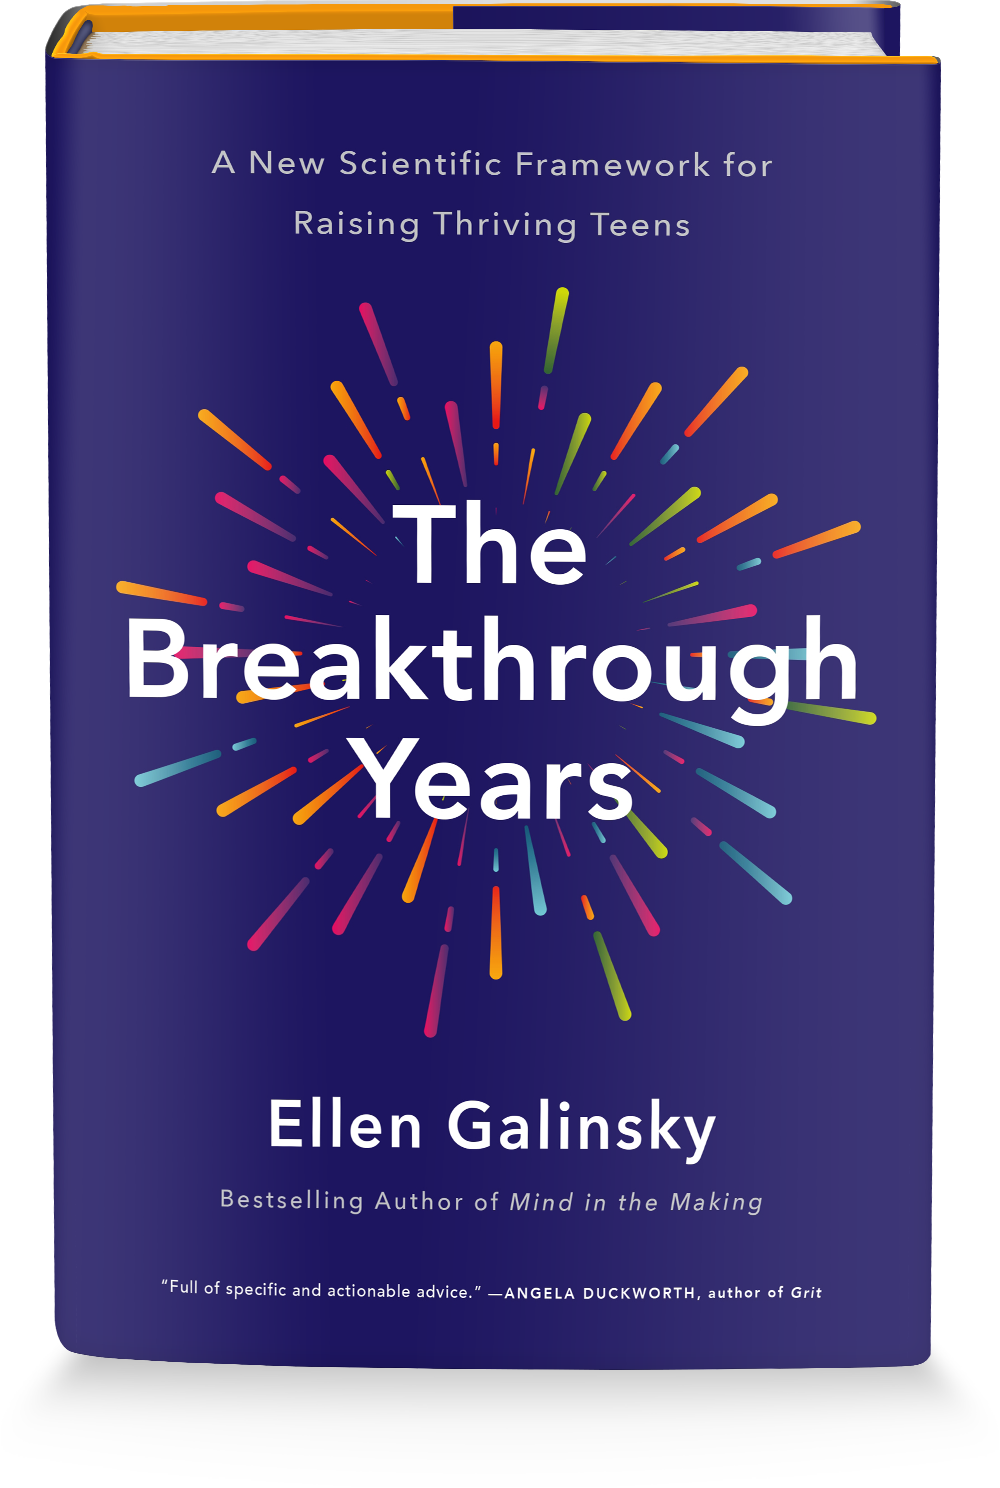 The Breakthrough Years by Ellen Galinsky